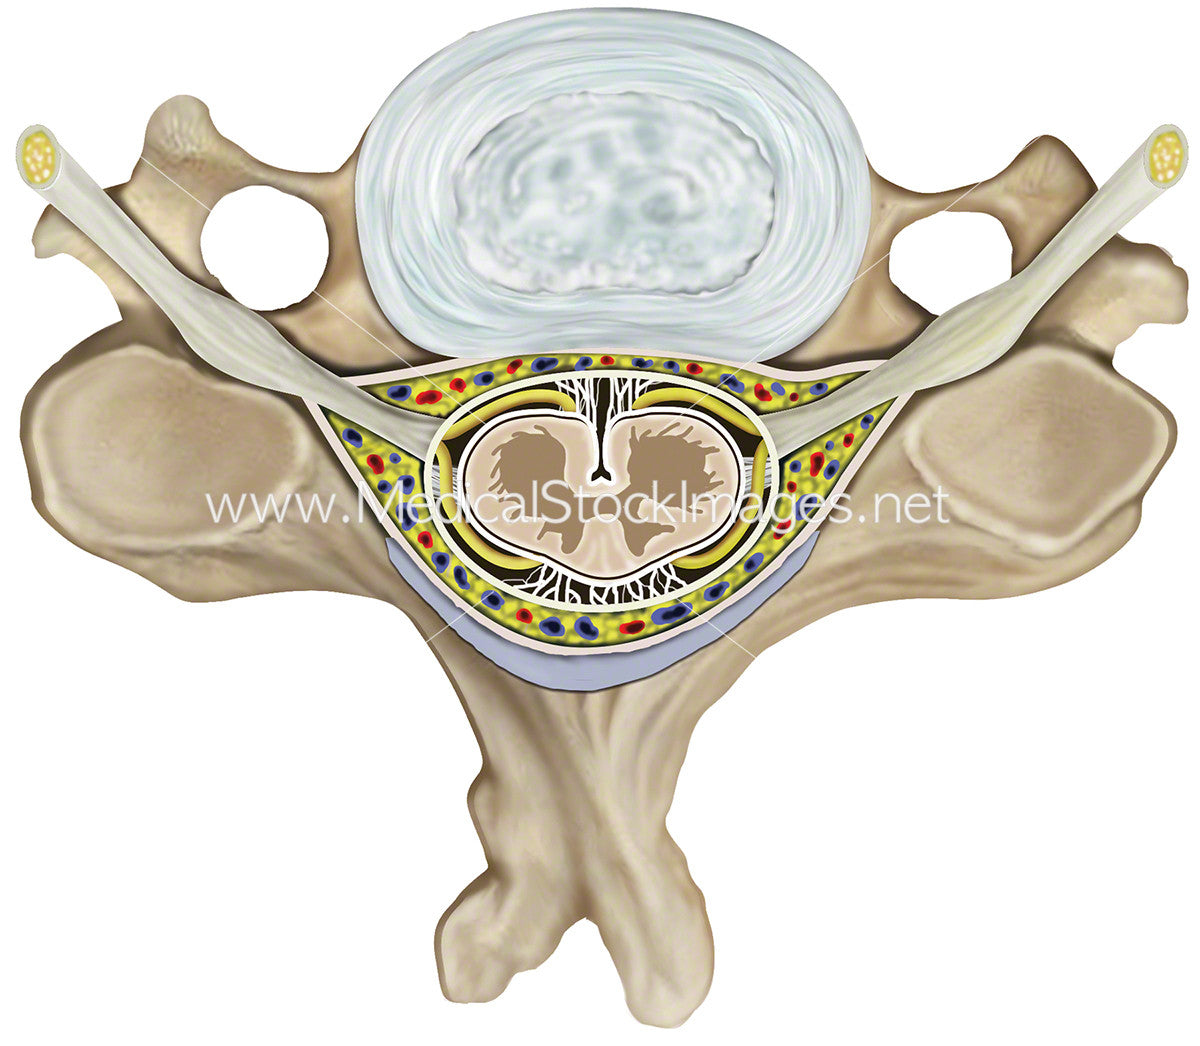 Healthy Anatomy Cervical Vertebra – Medical Stock Images Company